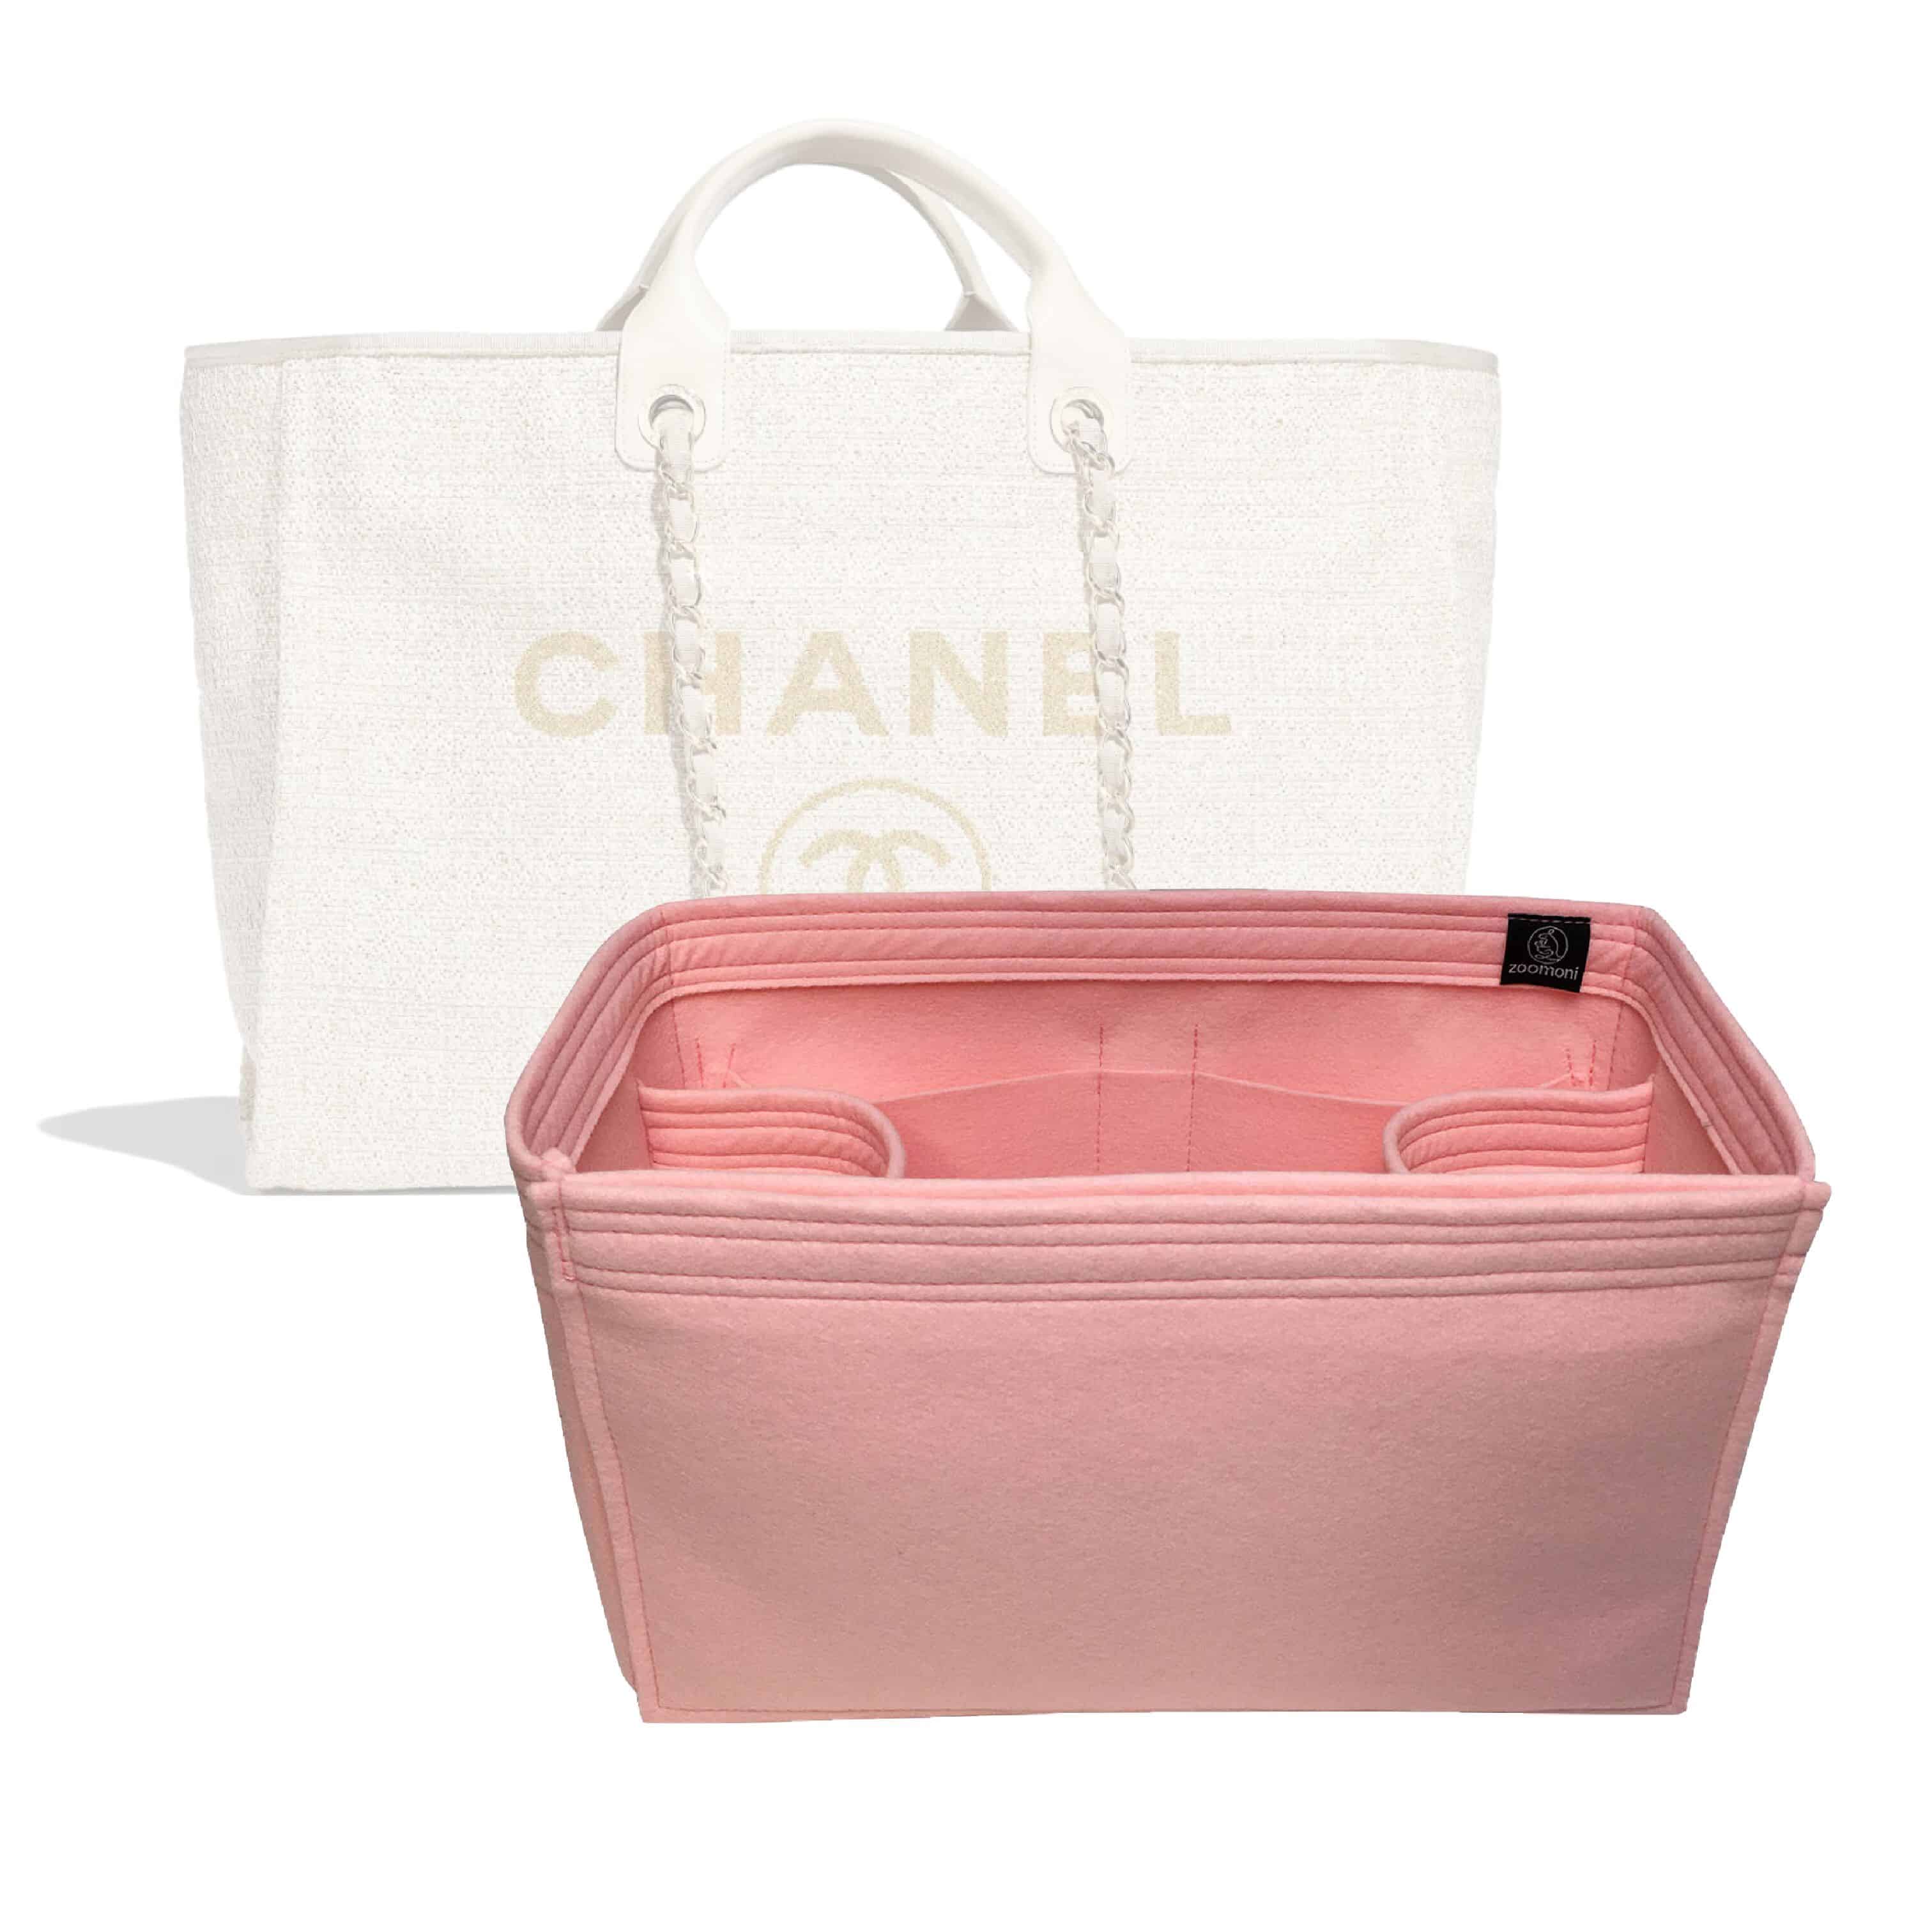  Bag Organizer for Chanel Deauville Medium - Premium